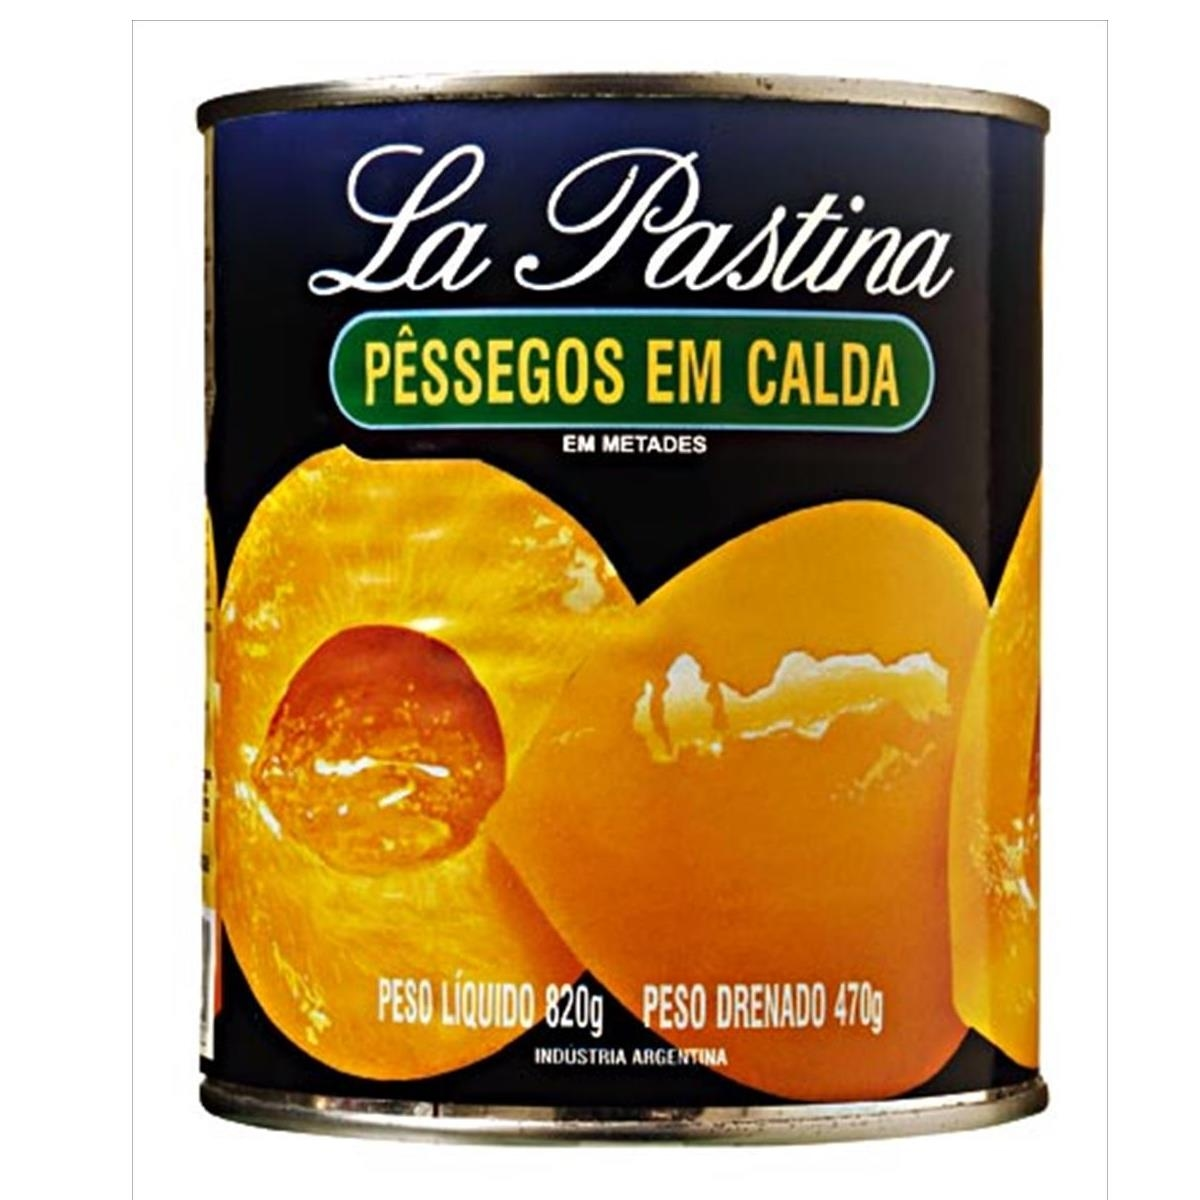 Geleia Bonne Maman sabor pêssego - 370g